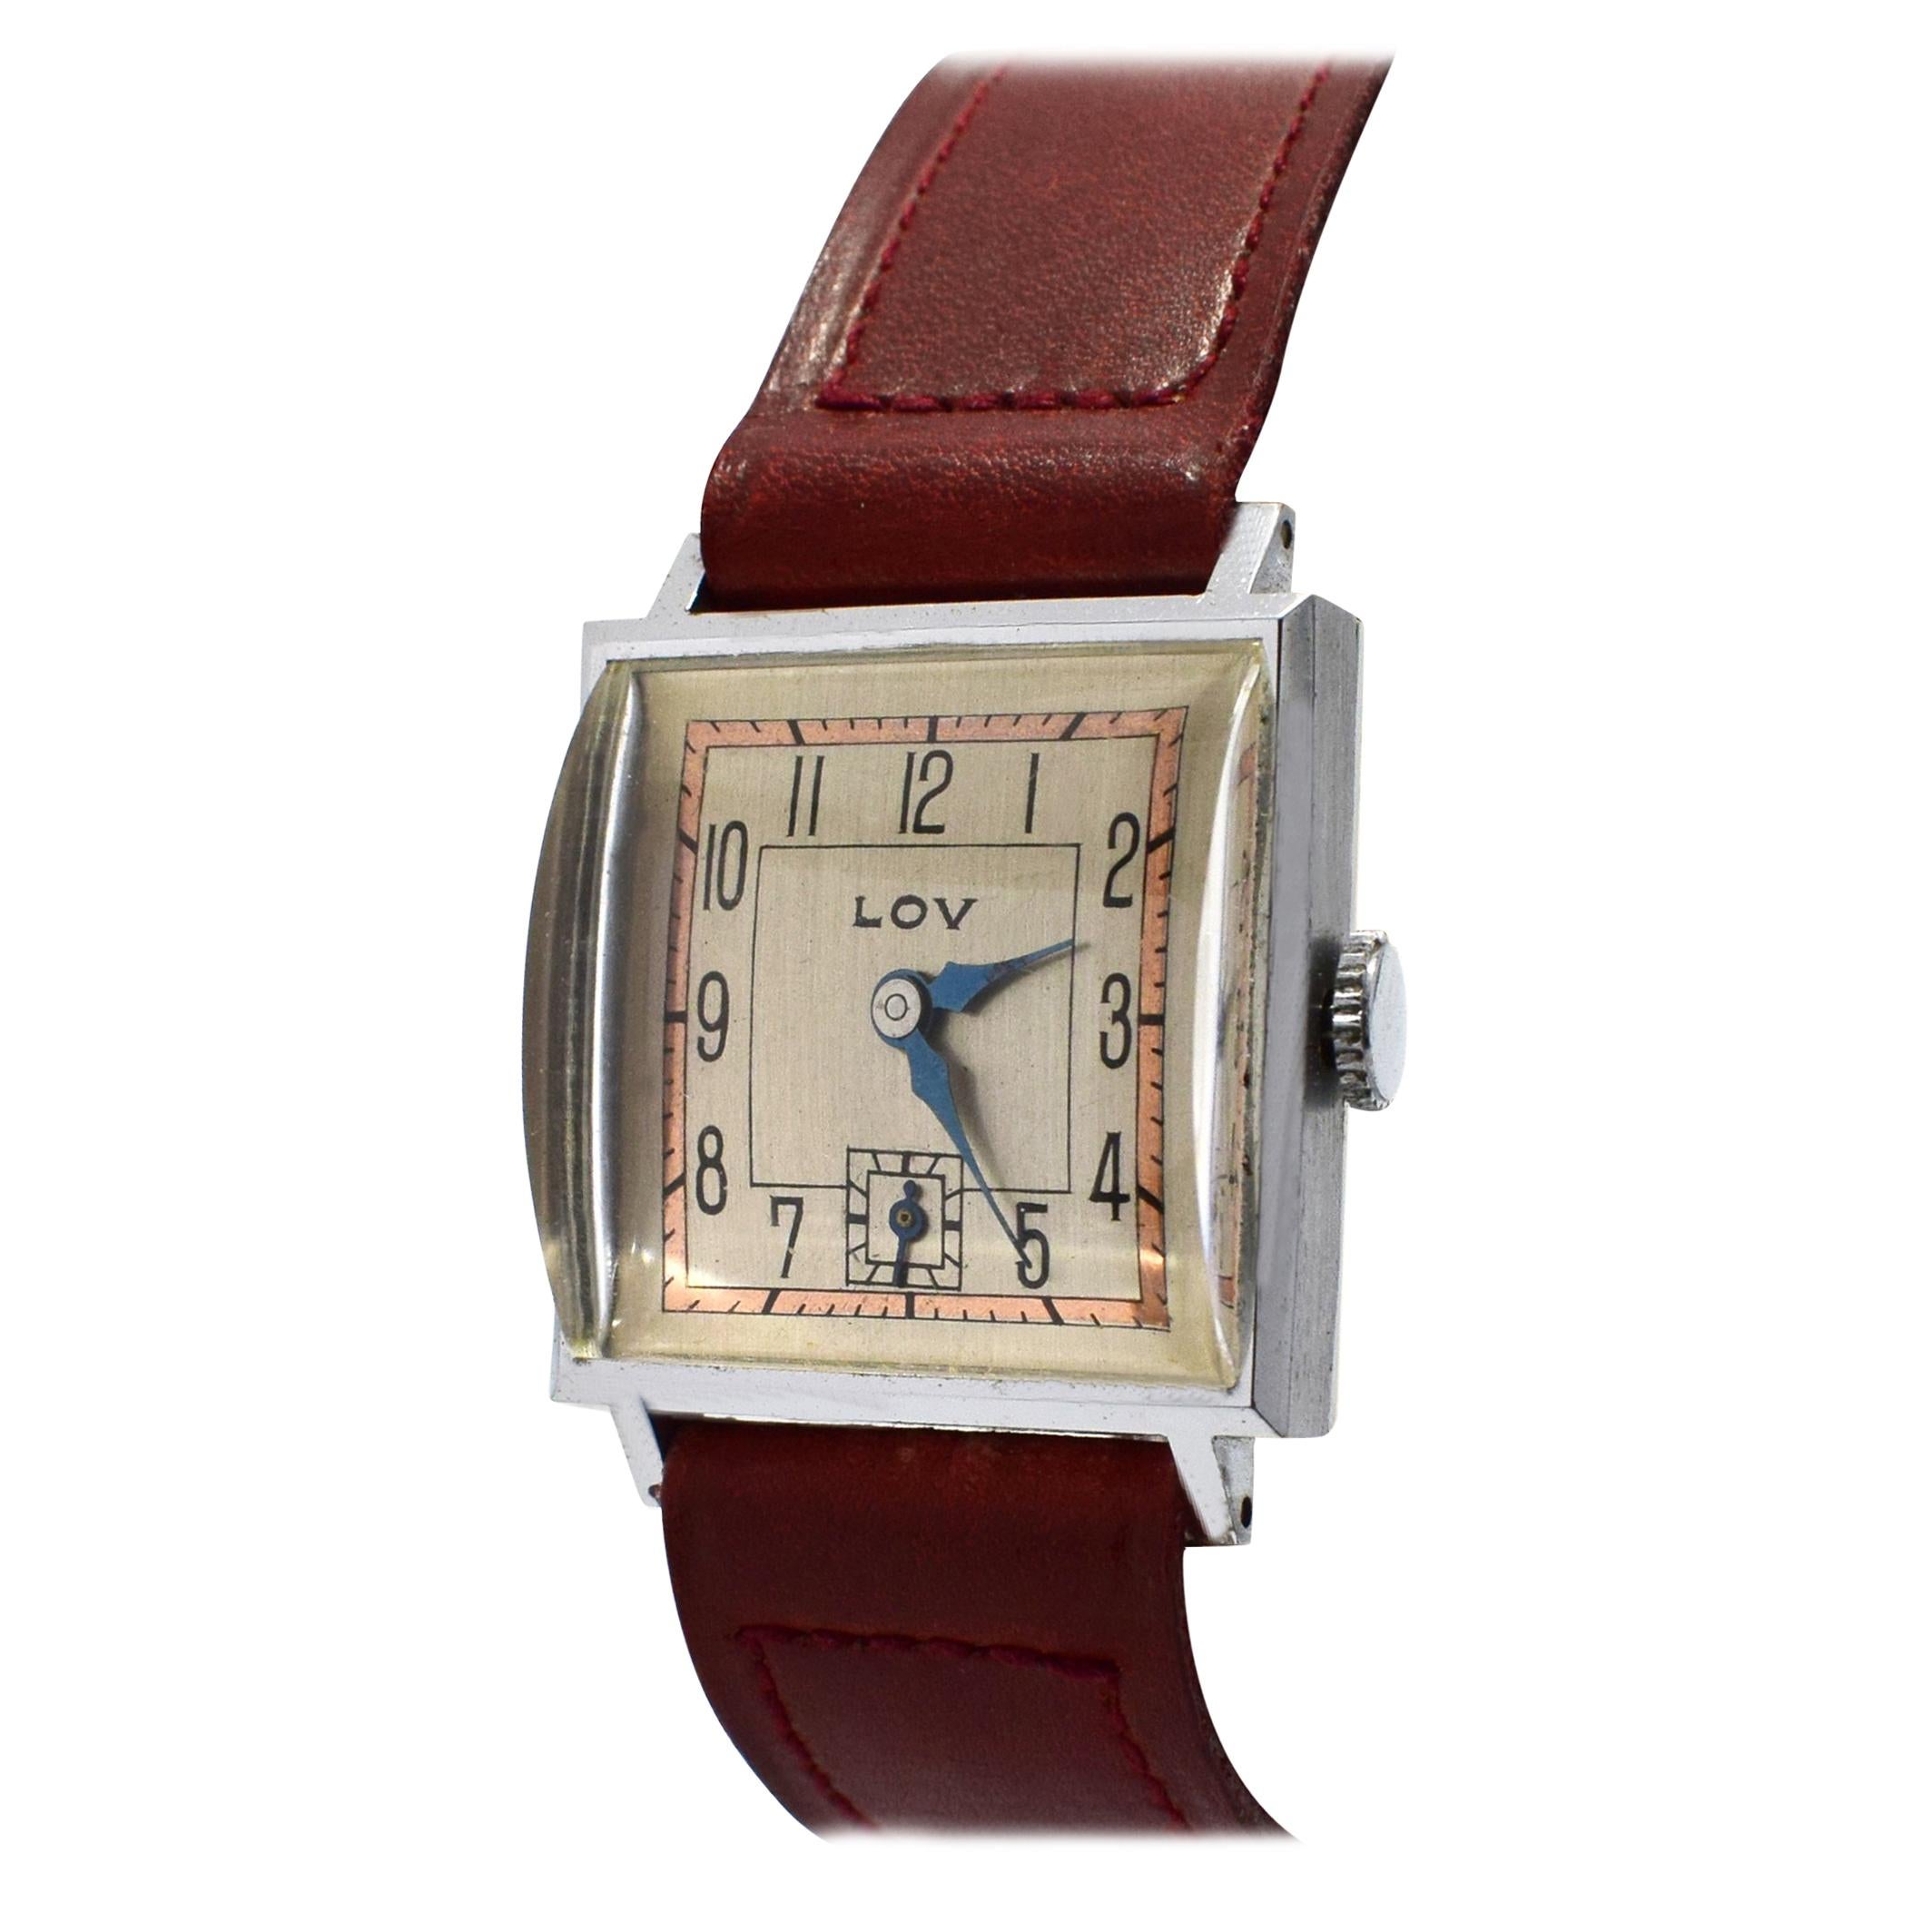 Stylish Art Deco Gents Wrist Watch by Lov or Never Worn, circa 1930